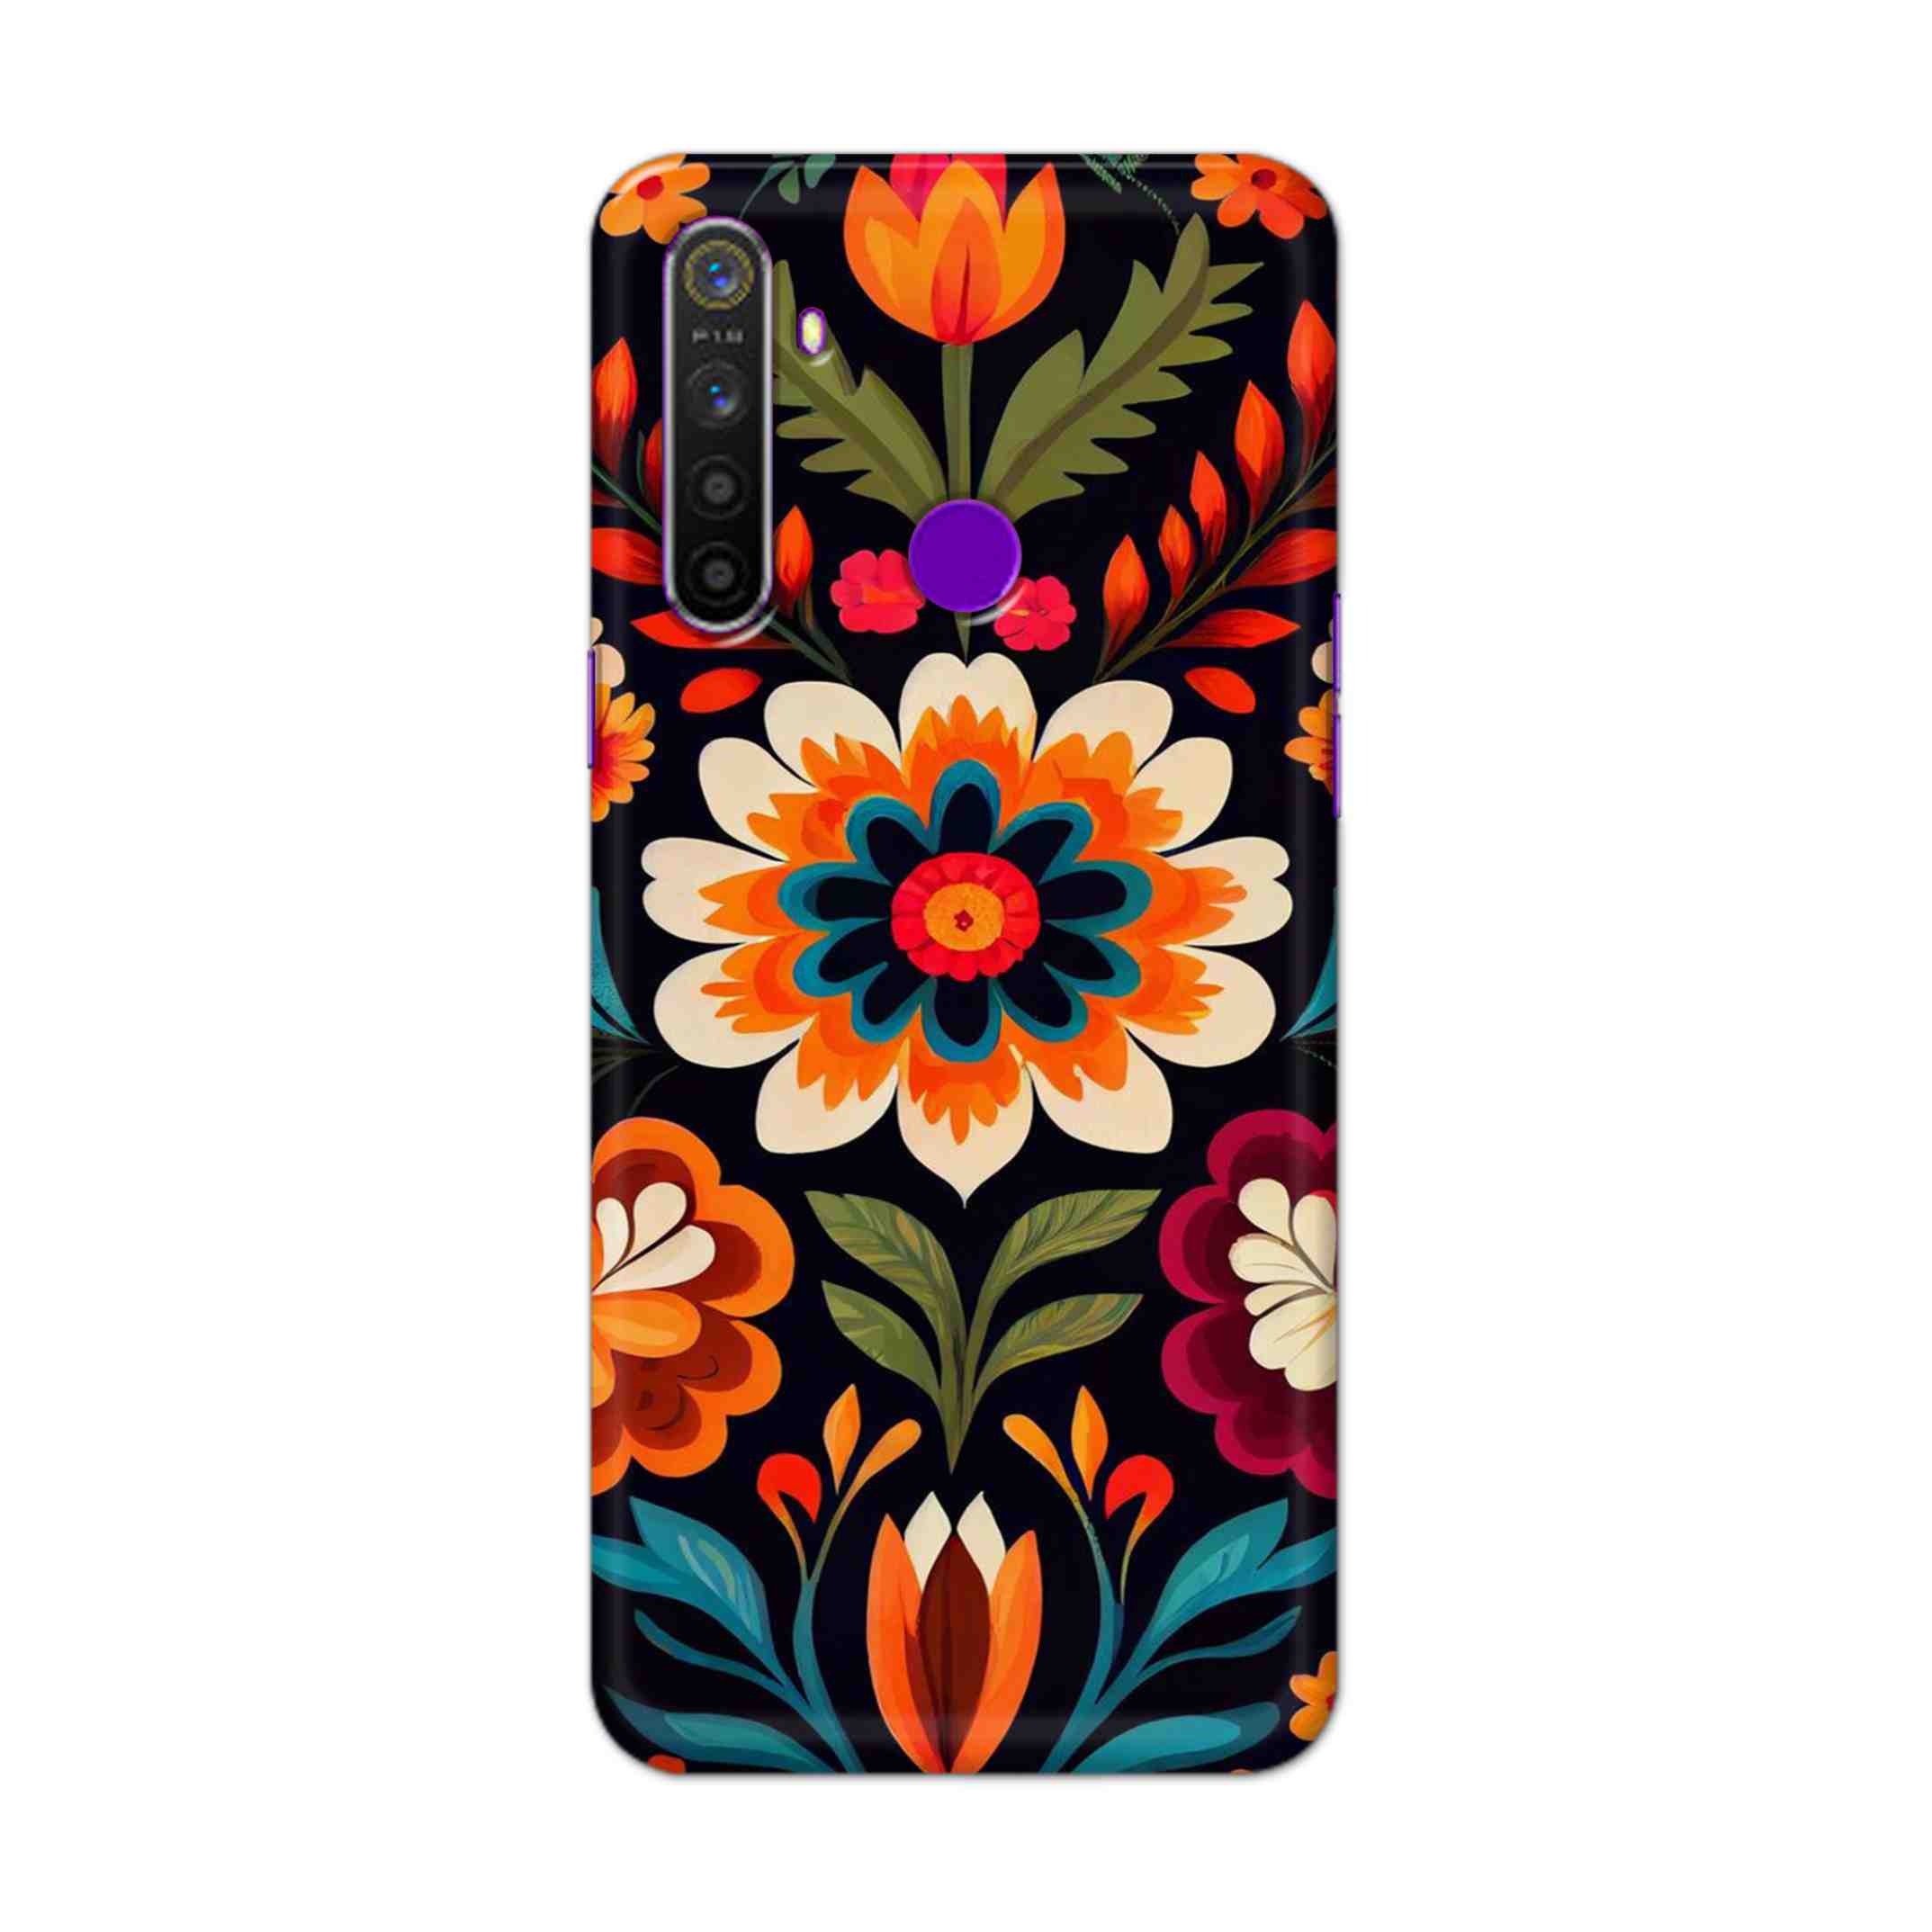 Buy Flower Hard Back Mobile Phone Case Cover For Realme 5 Online